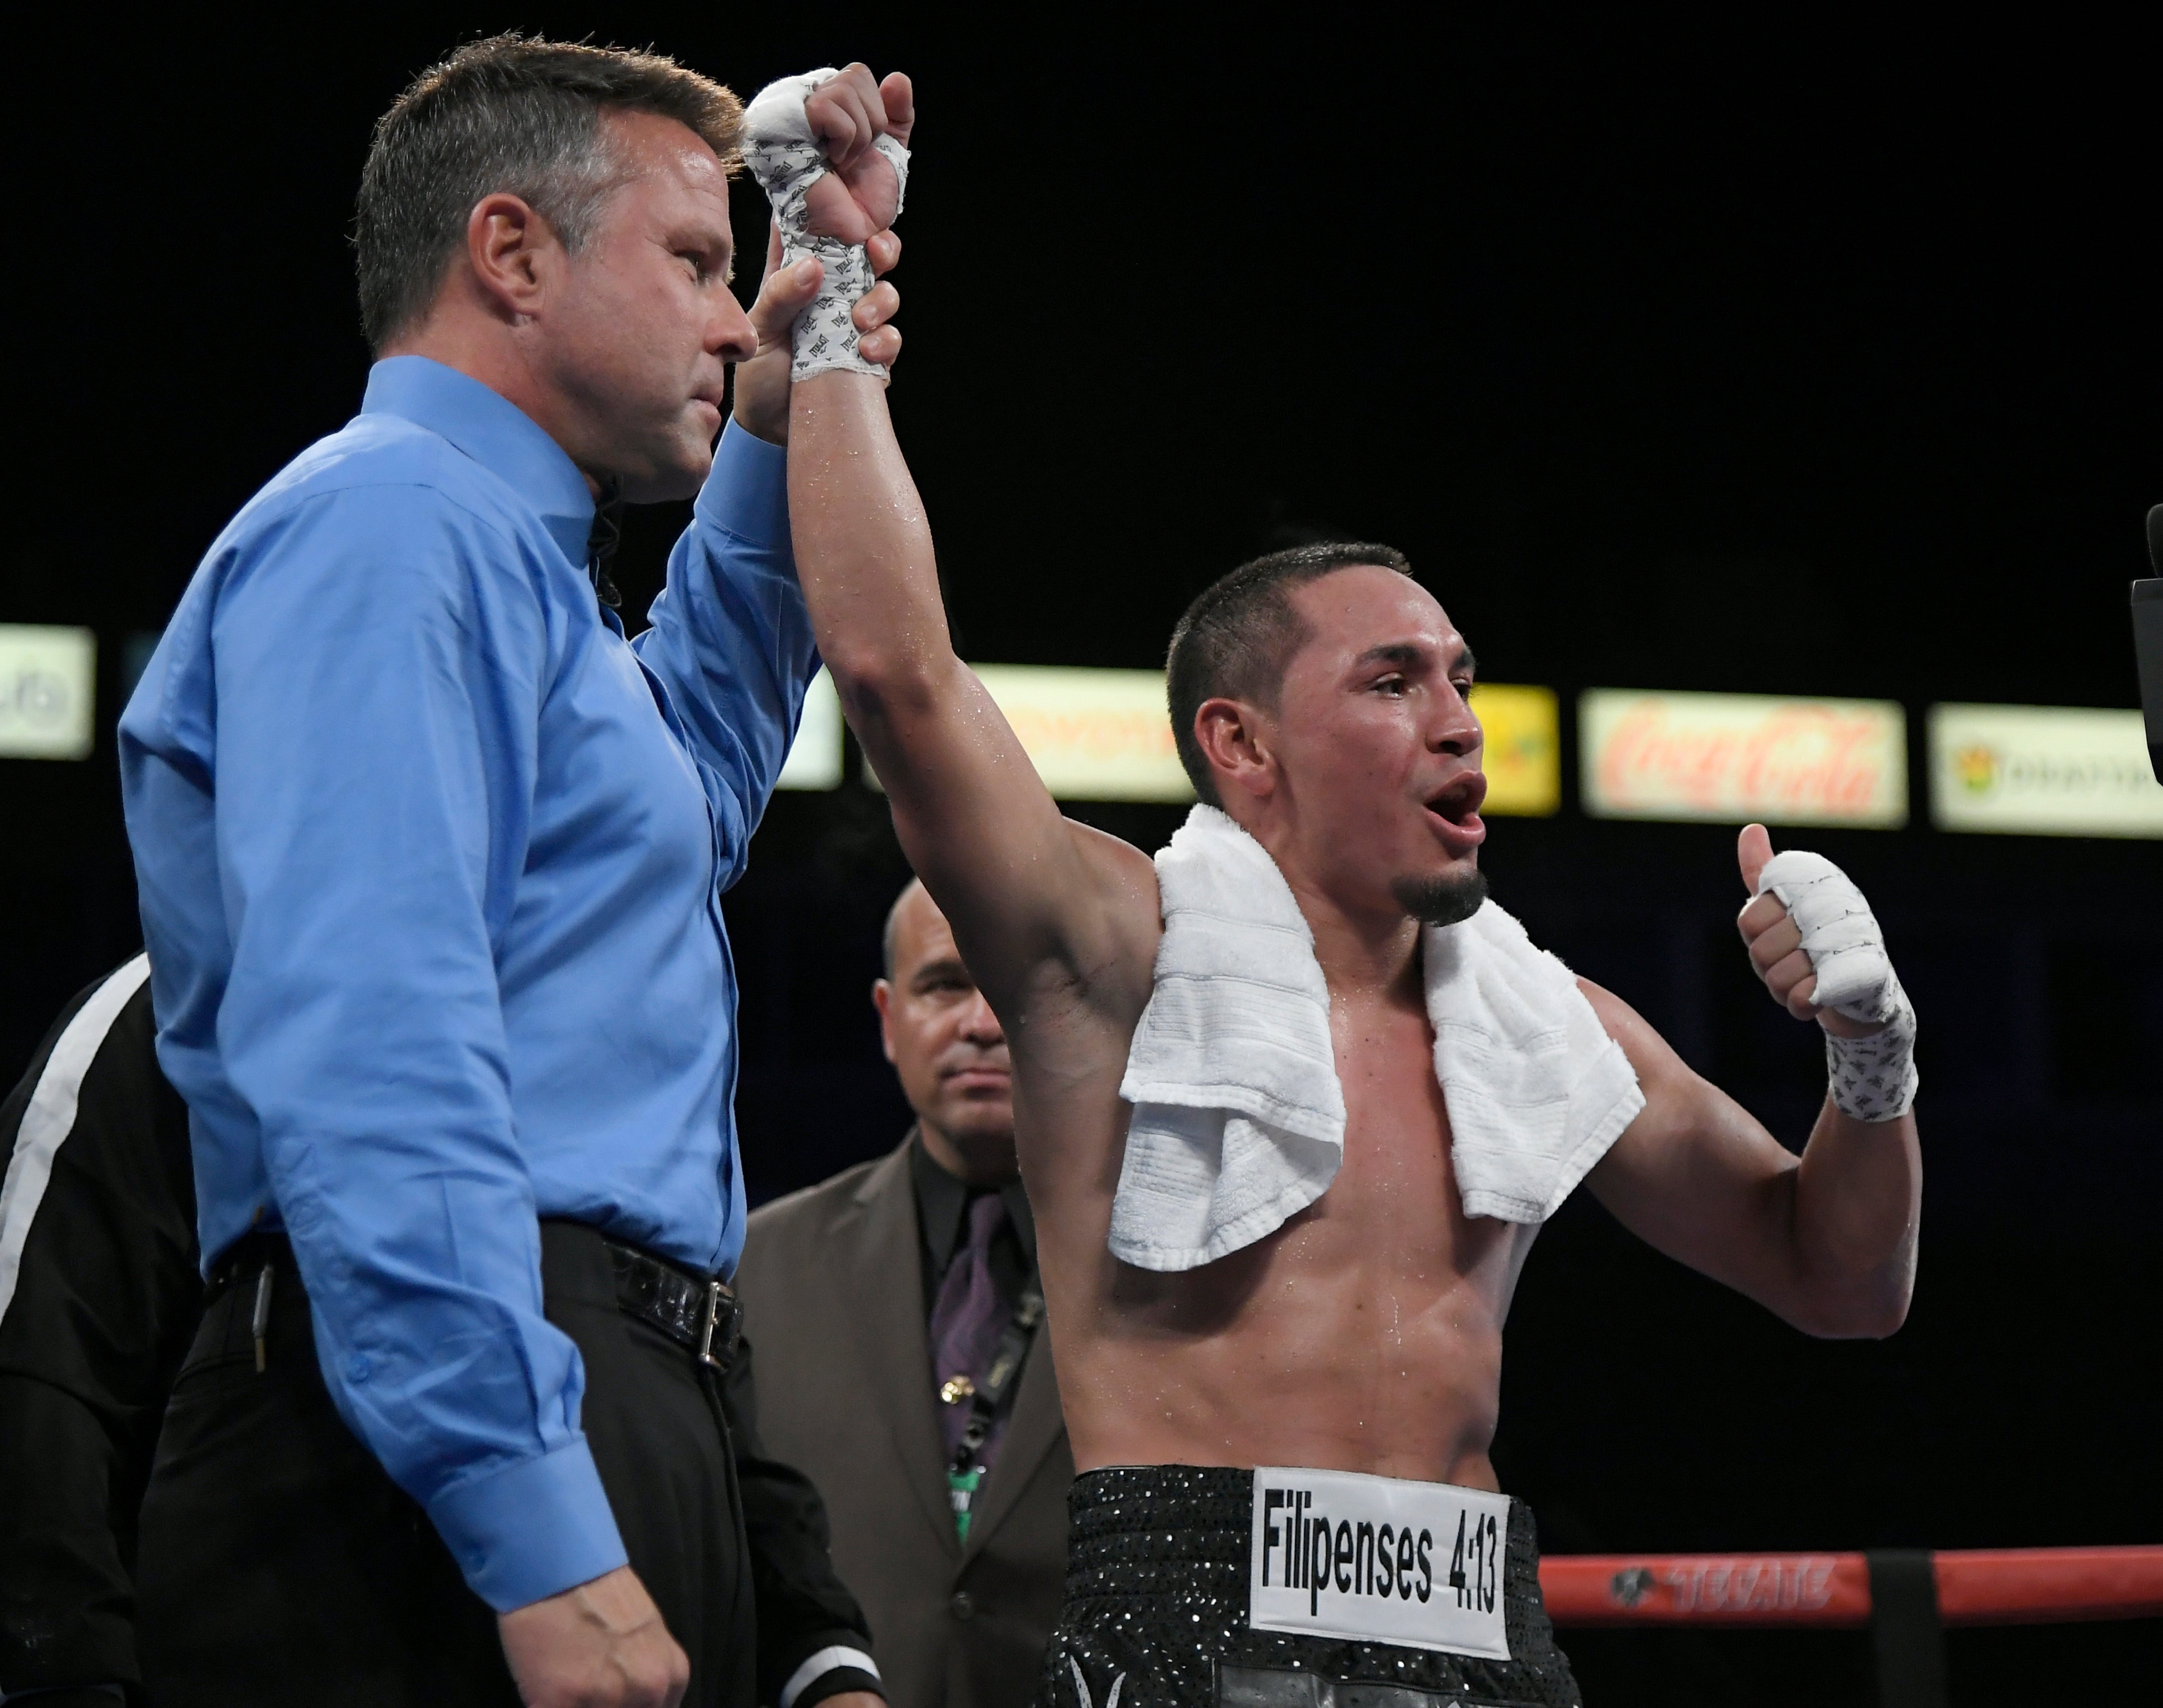 Juan Francisco Estrada has his hand raised in victory after defeating Victor Mendez